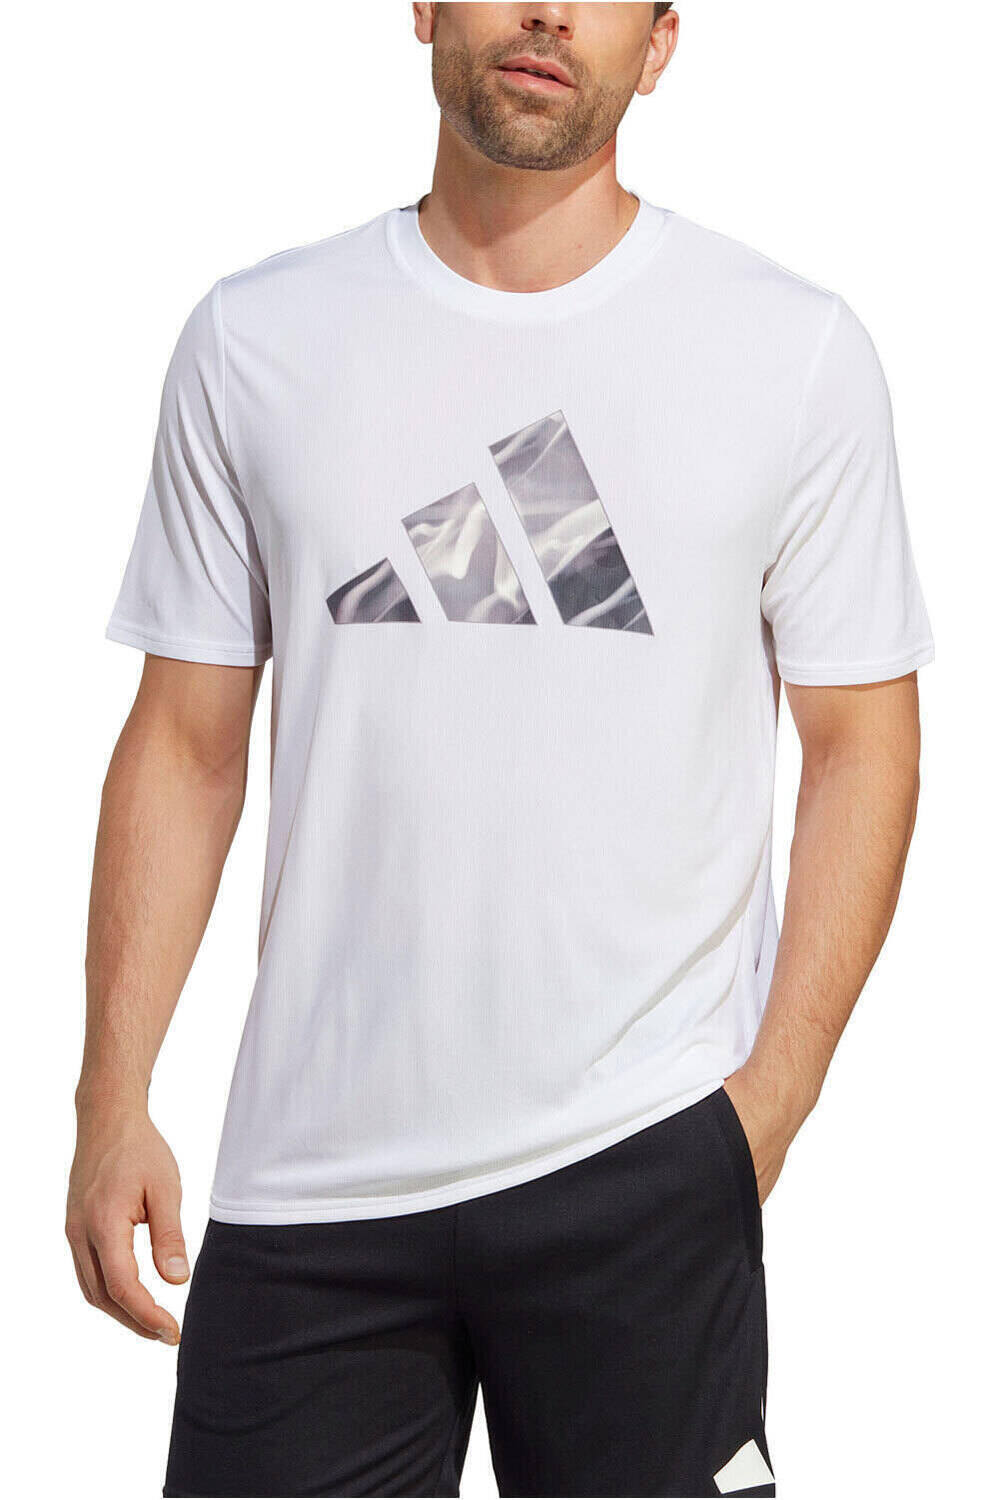 adidas camiseta fitness hombre Designed for Movement HIIT Training vista frontal